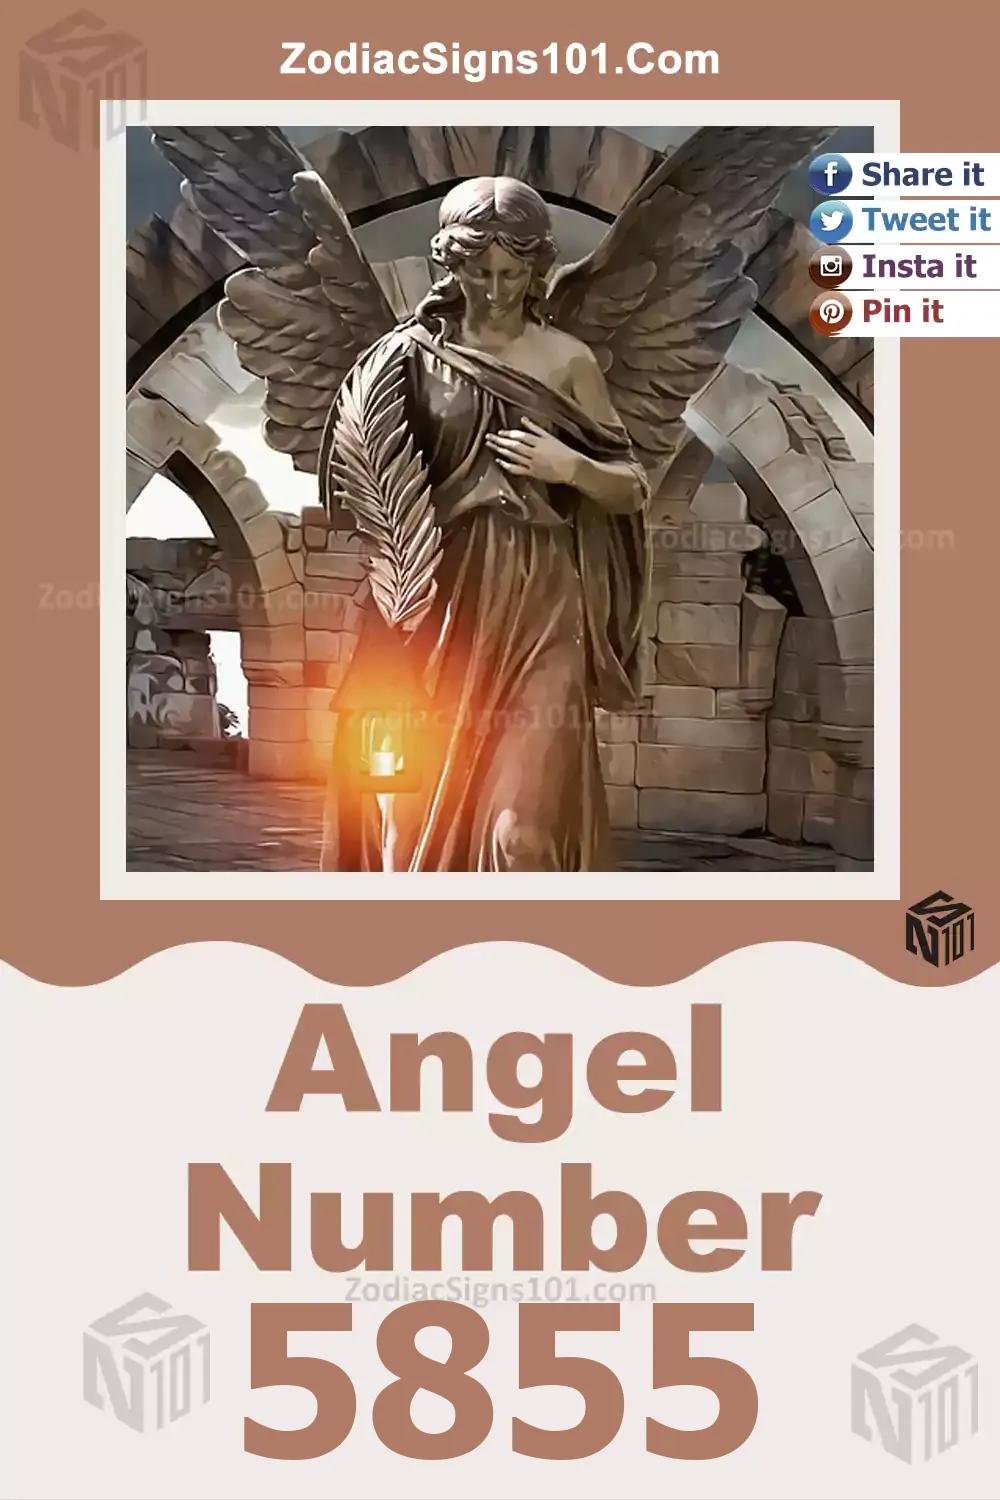 5855-Angel-Number-Meaning.jpg